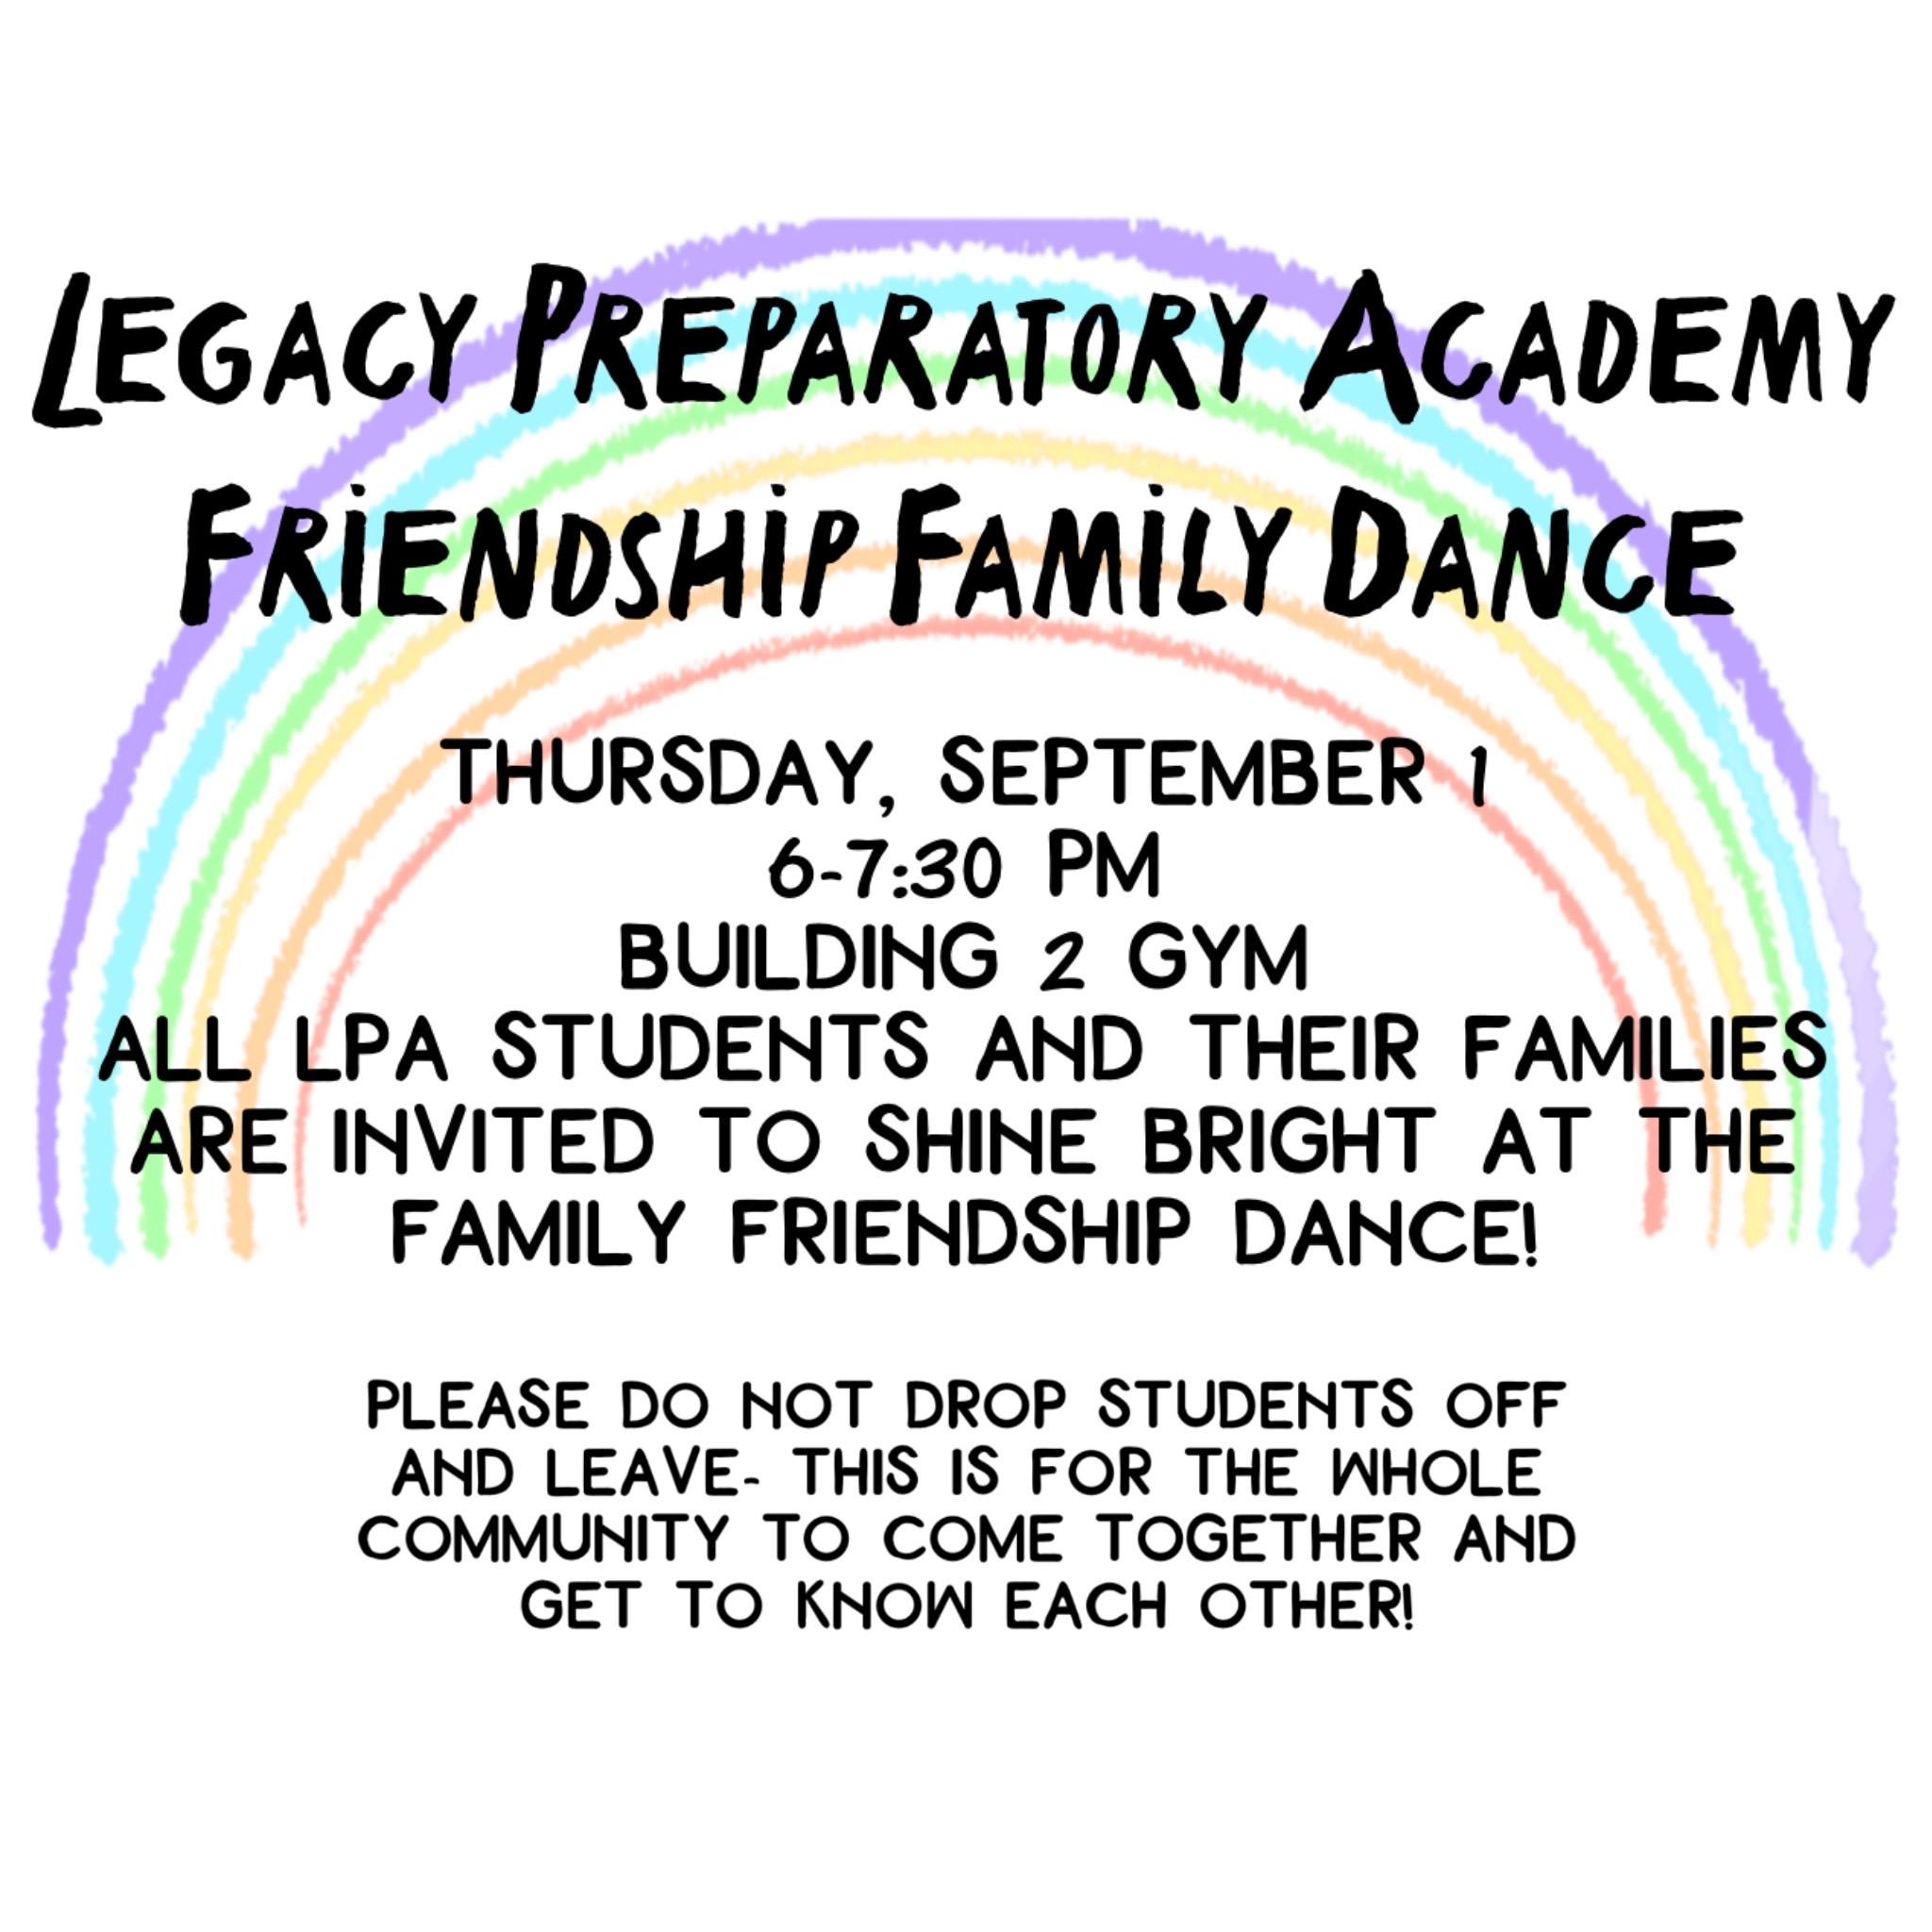 Family Dance Thursday 9/1 Building 2 gym 6-7:30